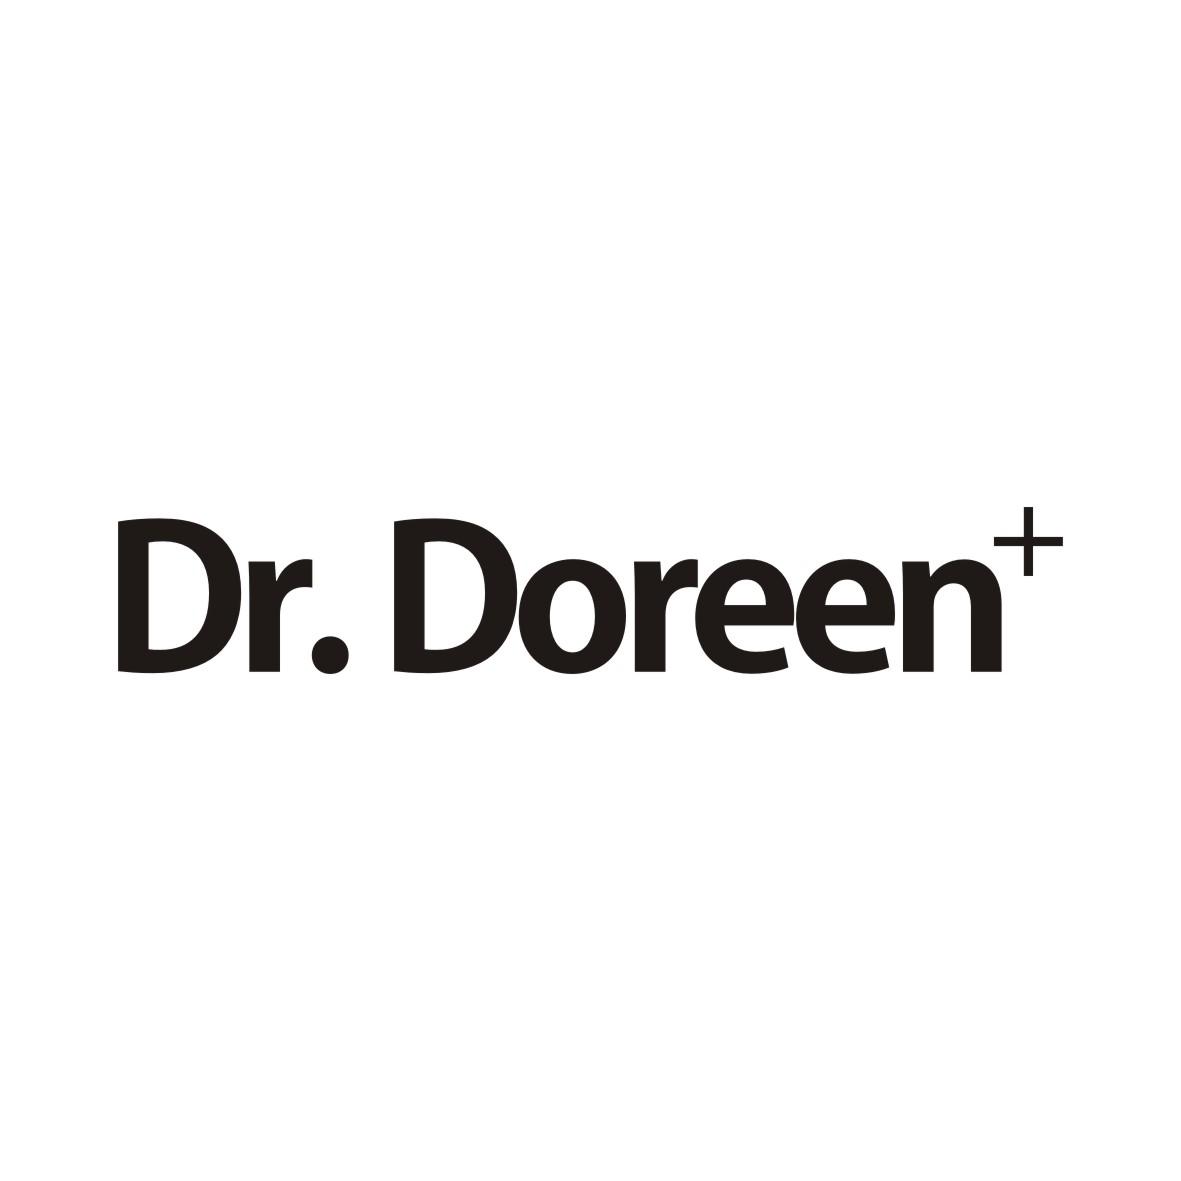 18类-箱包皮具DR.DOREEN+商标转让